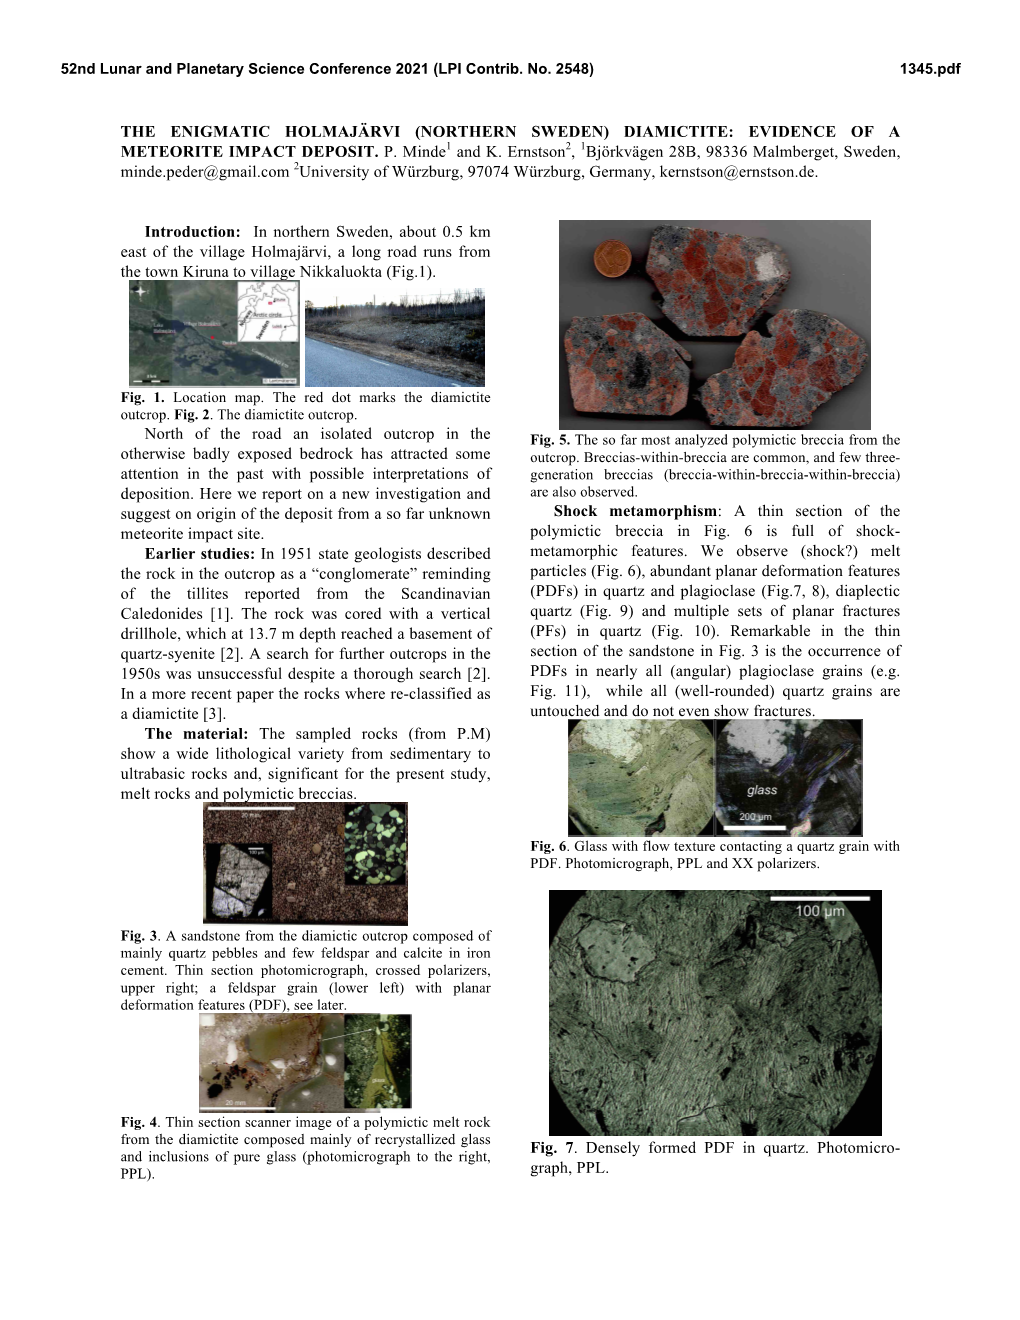 Diamictite: Evidence of a Meteorite Impact Deposit